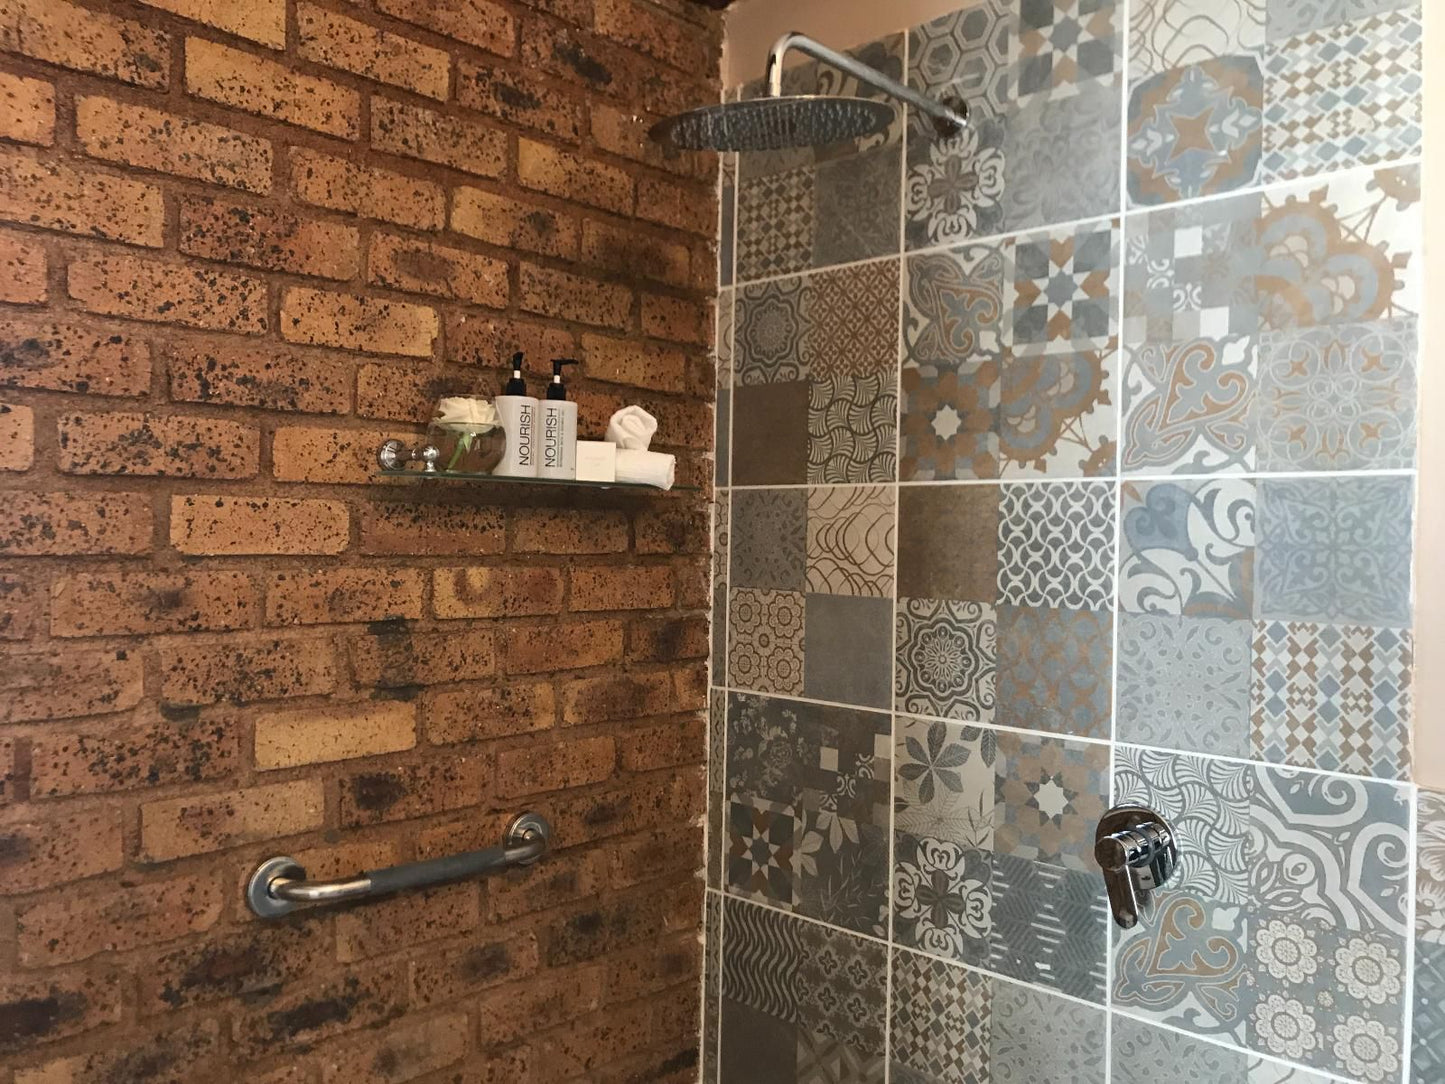 No 5 On Franschoek Sandton Johannesburg Gauteng South Africa Wall, Architecture, Bathroom, Brick Texture, Texture